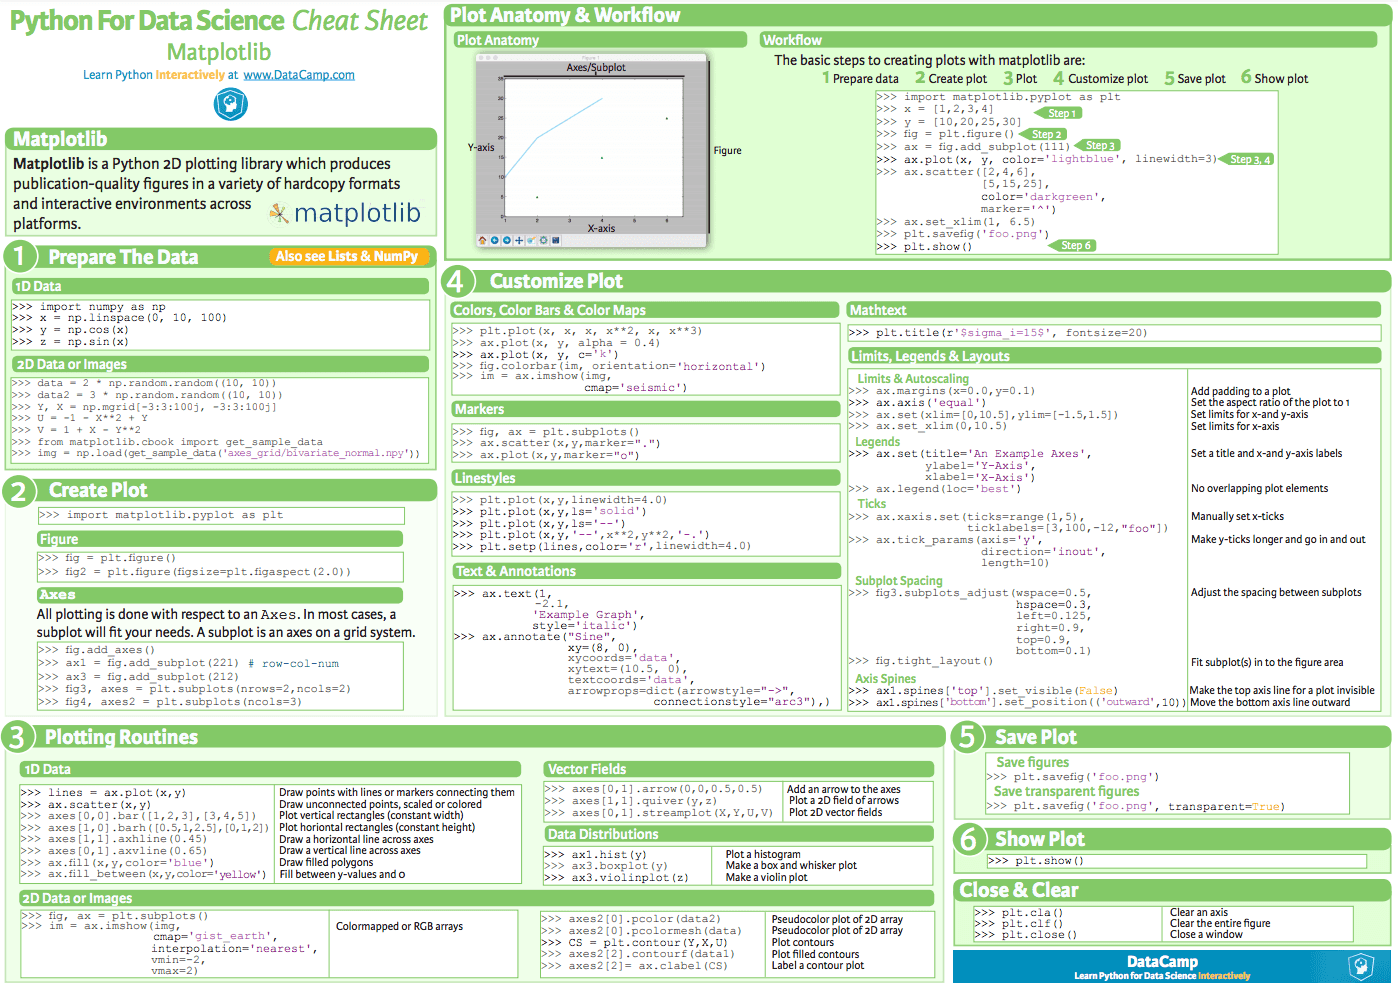 Matplotlib cheatsheet by Datacamp.